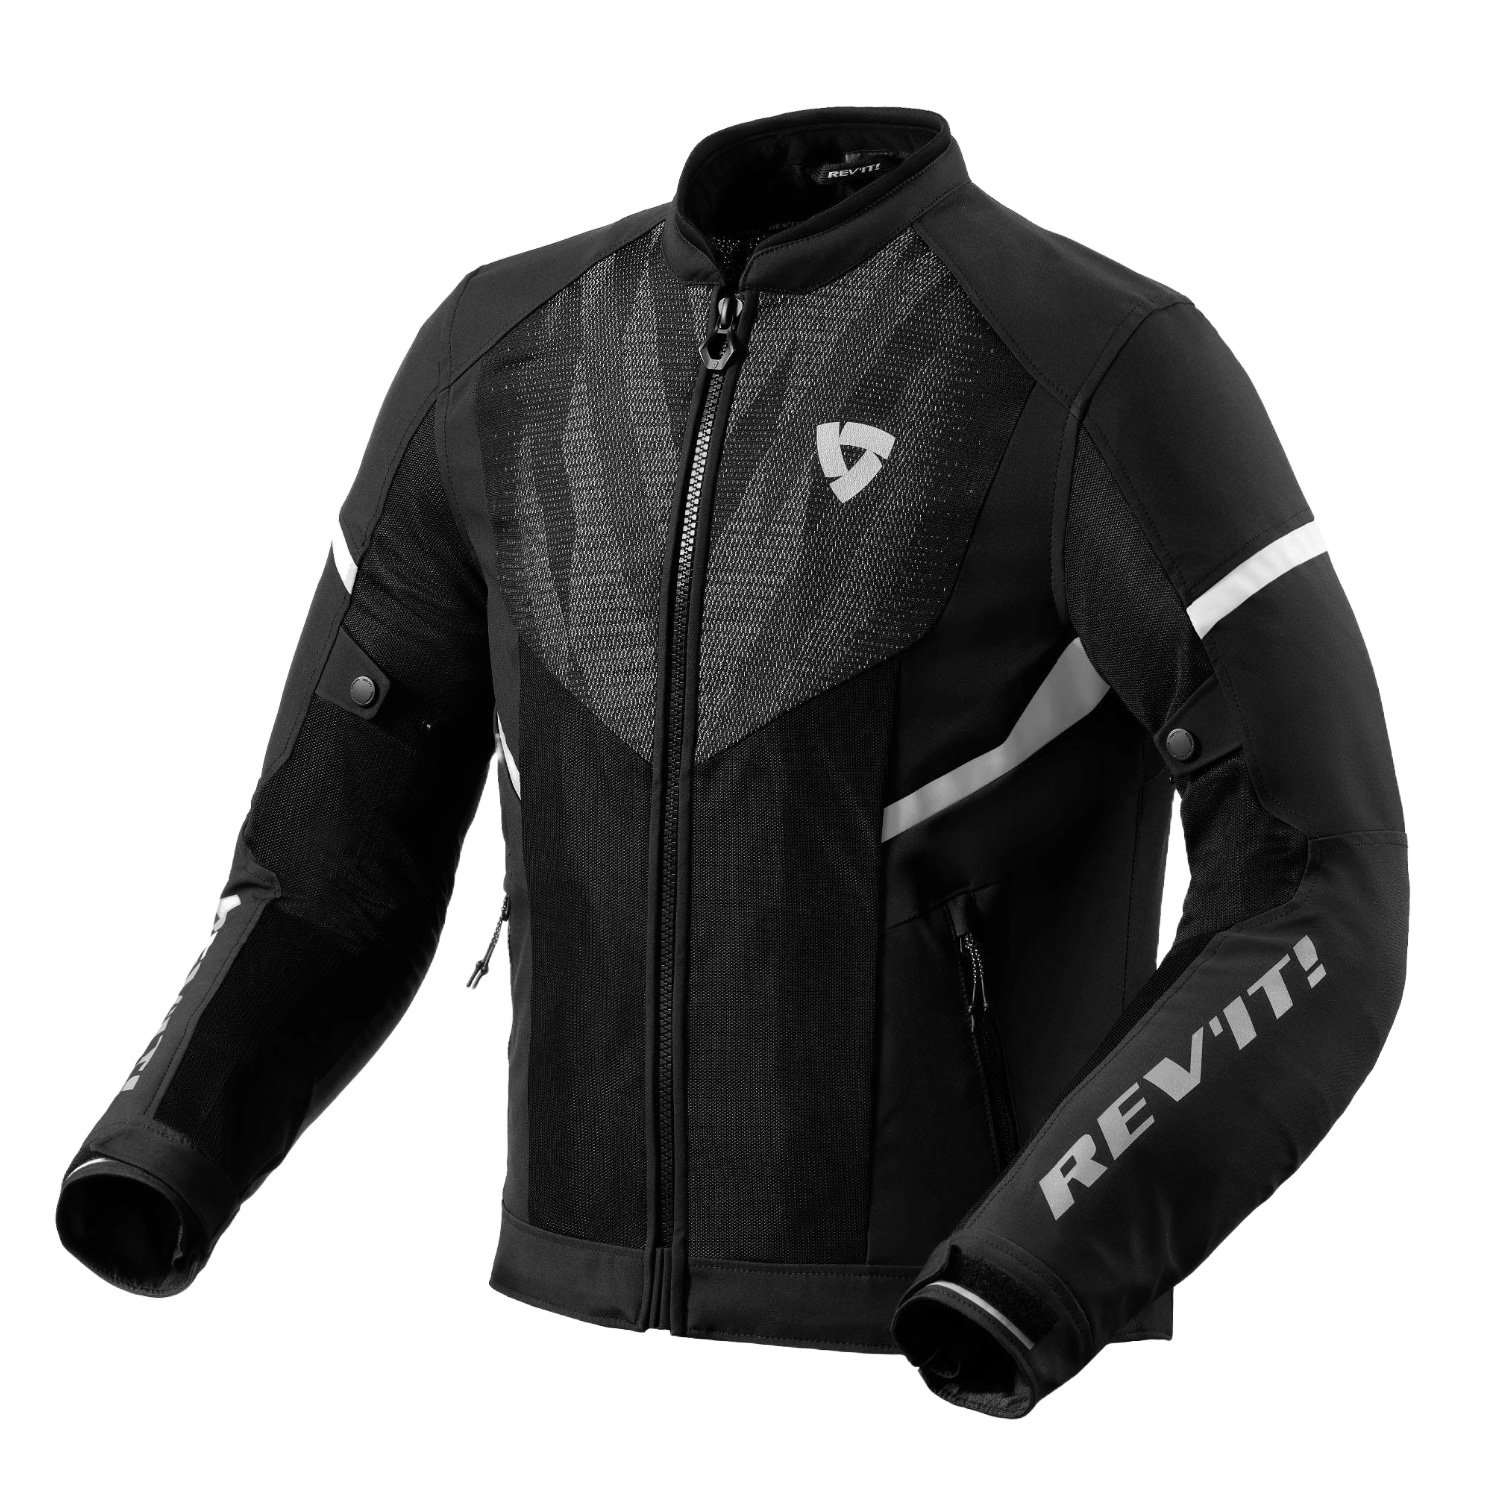 Image of REV'IT! Hyperspeed 2 GT Air Jacket Black White Size S EN